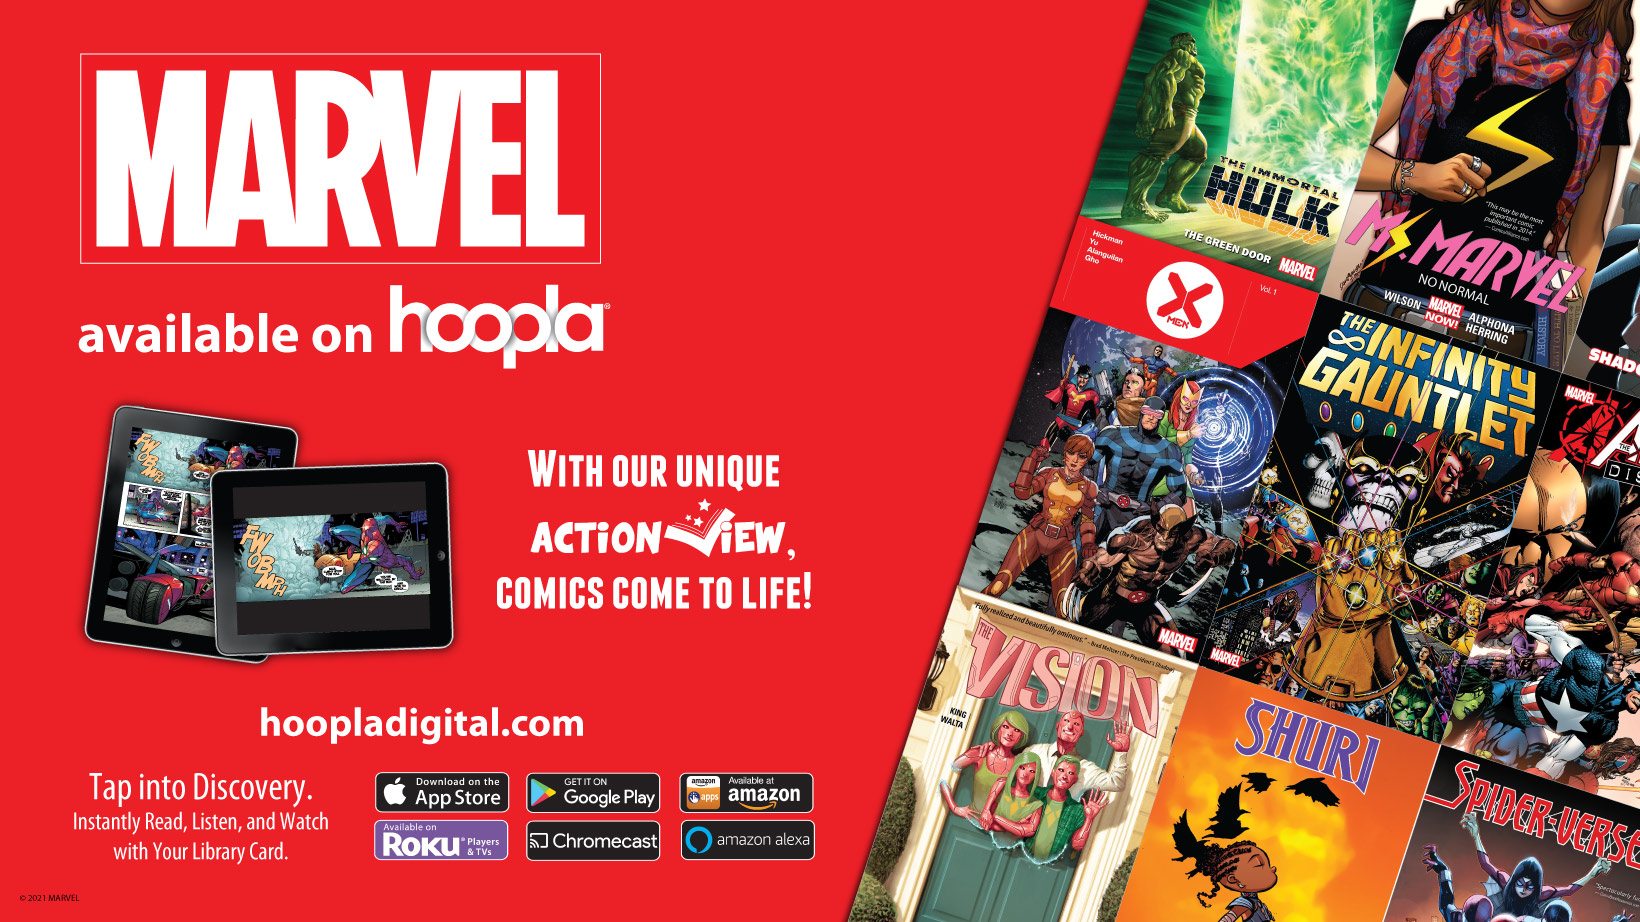 Marvel: Available on Hoopla